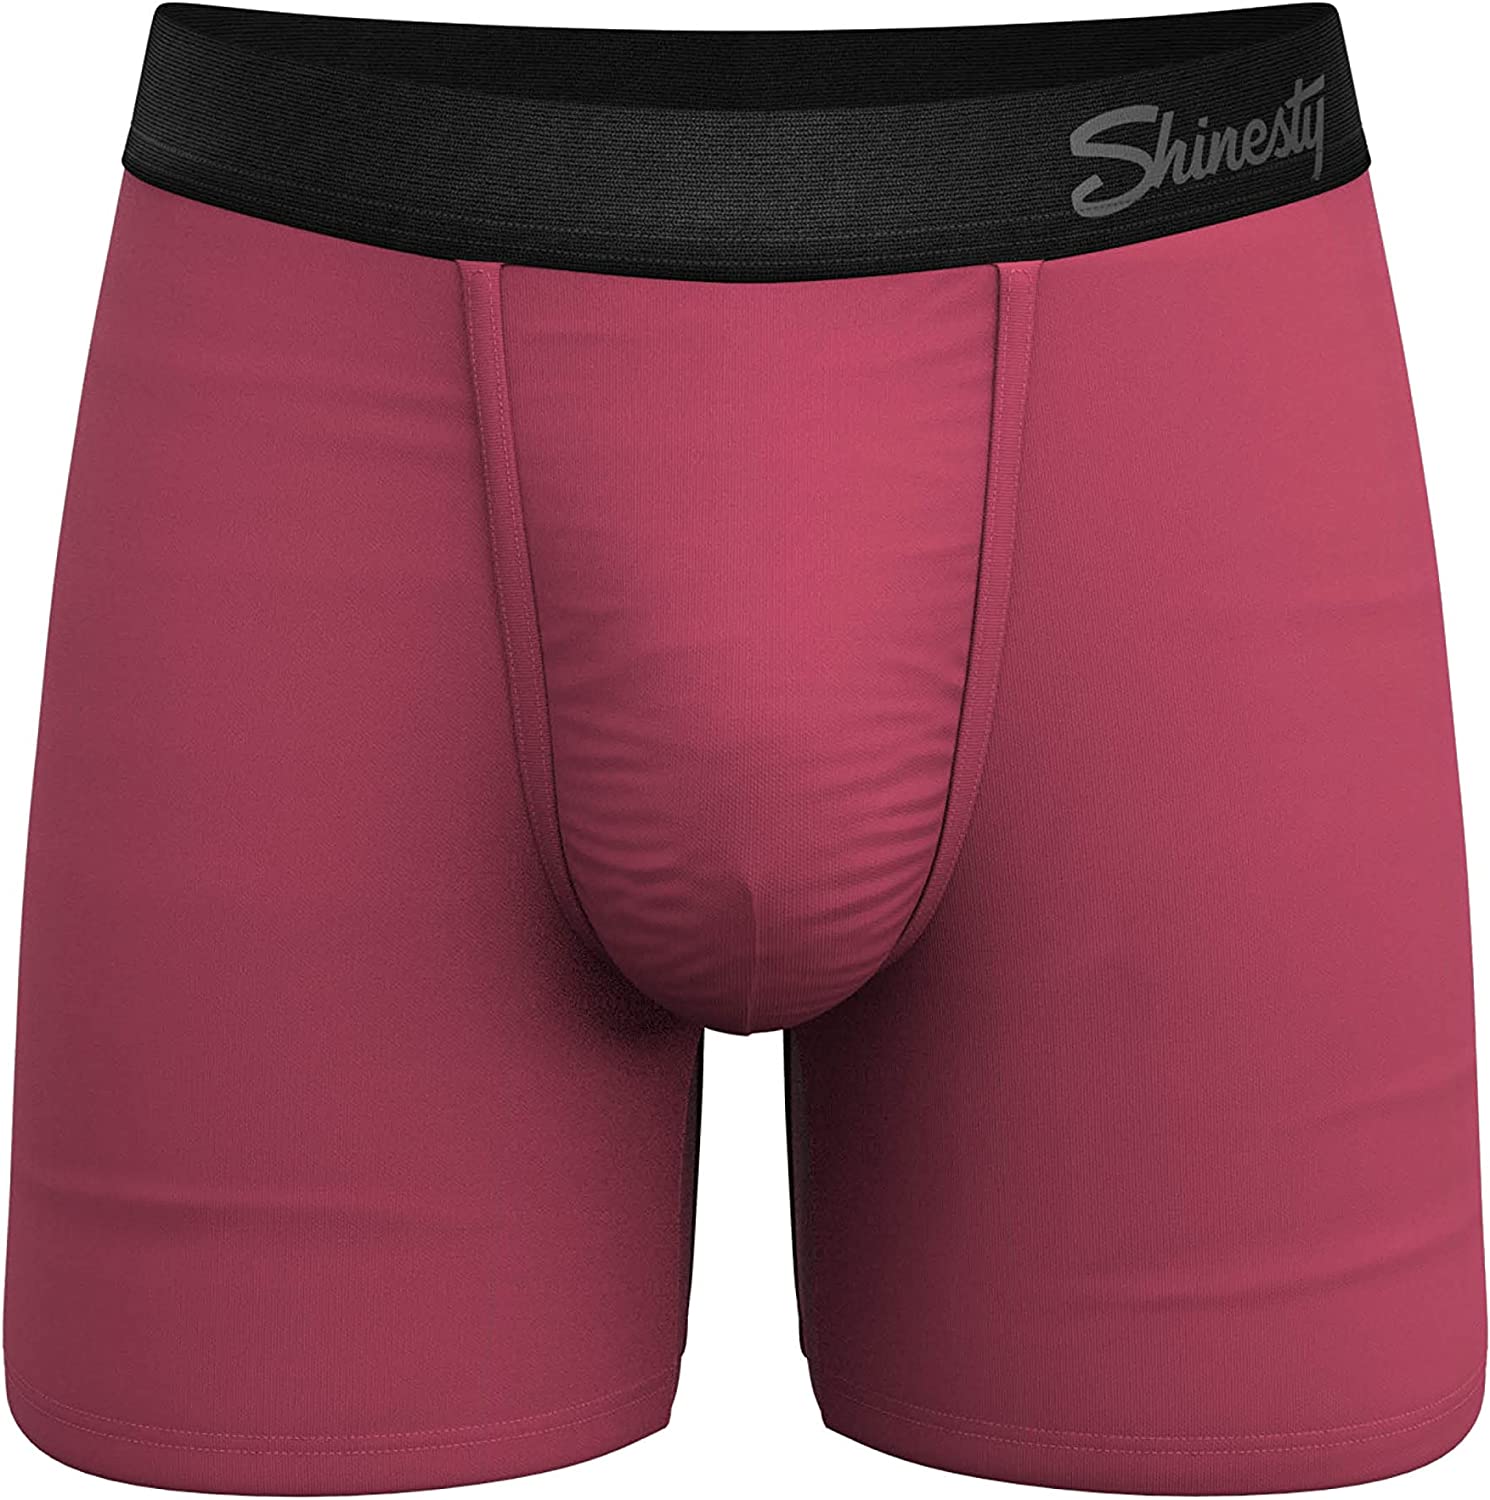 SHINESTY BALL HAMMOCK Mens Pouch Underwear The Darcy Sz M $22.00 - PicClick